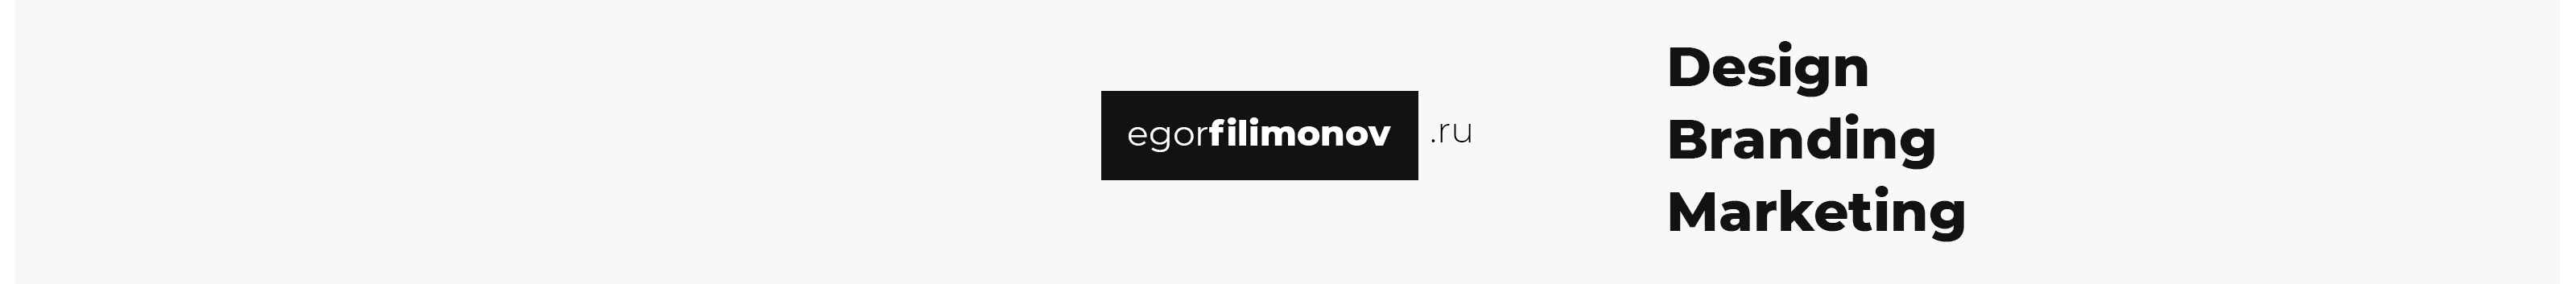 Pavel Filimonov's profile banner